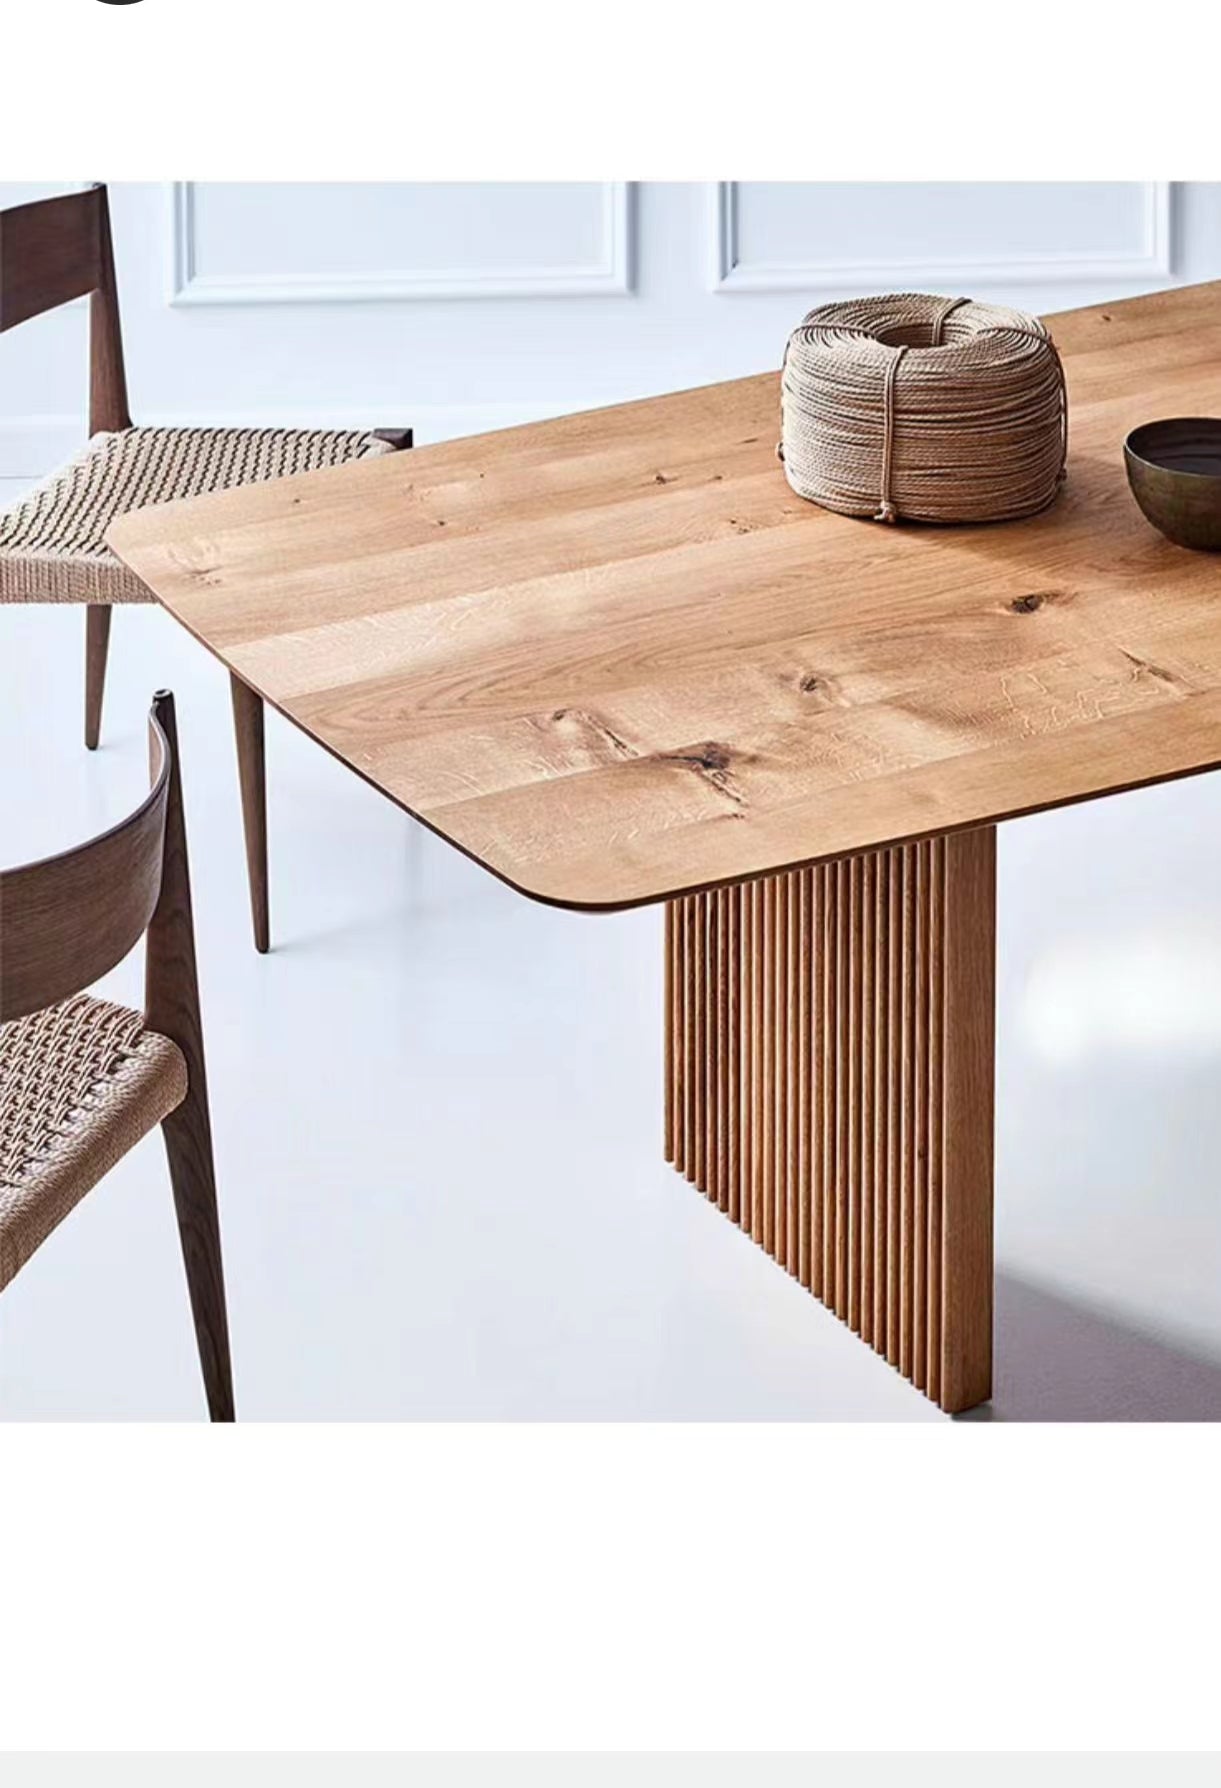 Rectangular Solid Pine Pedestal Dining Table - 4 Seasons Home Gadgets